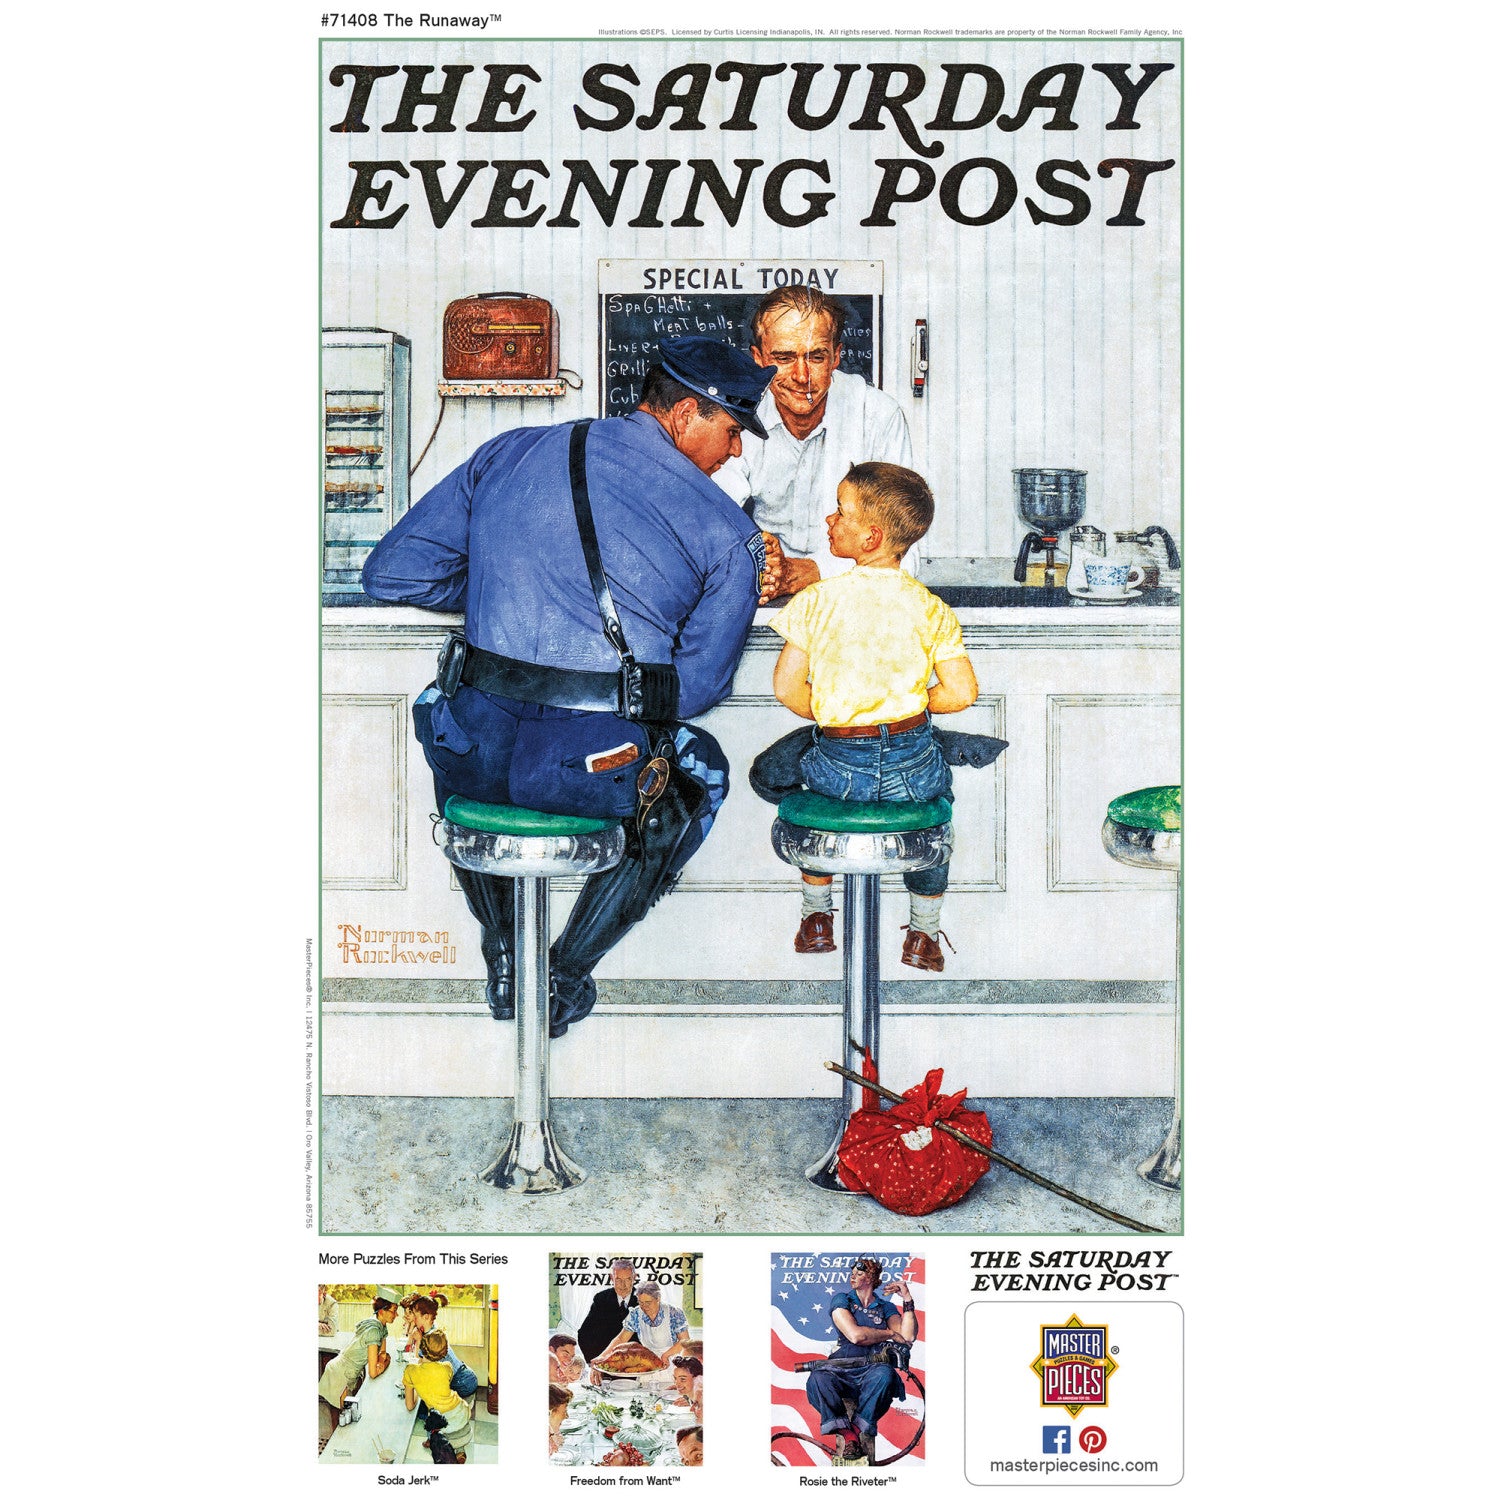 Saturday Evening Post - The Runaway 1000 Piece Puzzle